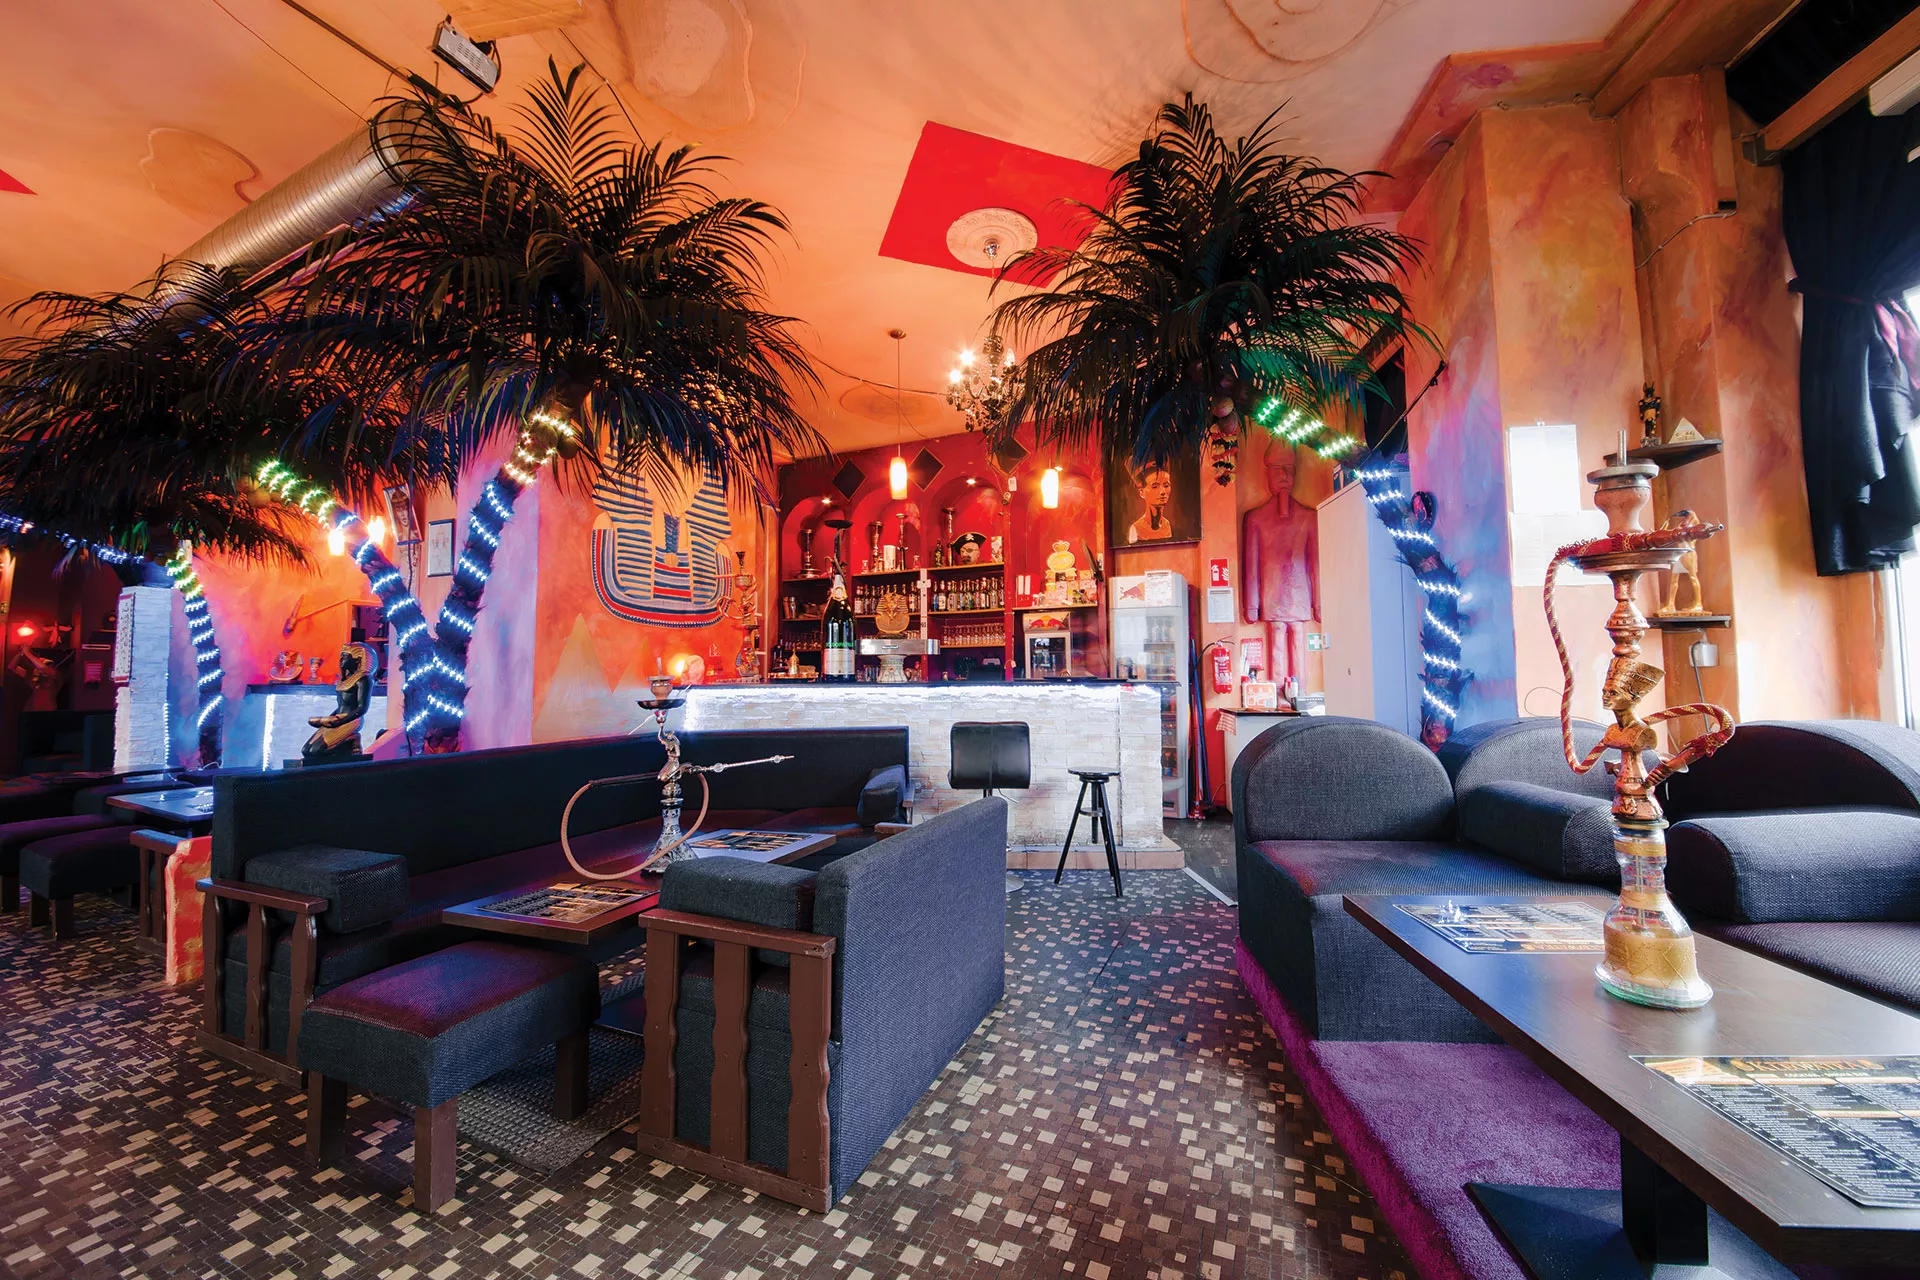 Cleopatra - Shisha Bar in Germany, Europe | Hookah Lounges,Bars - Rated 4.4